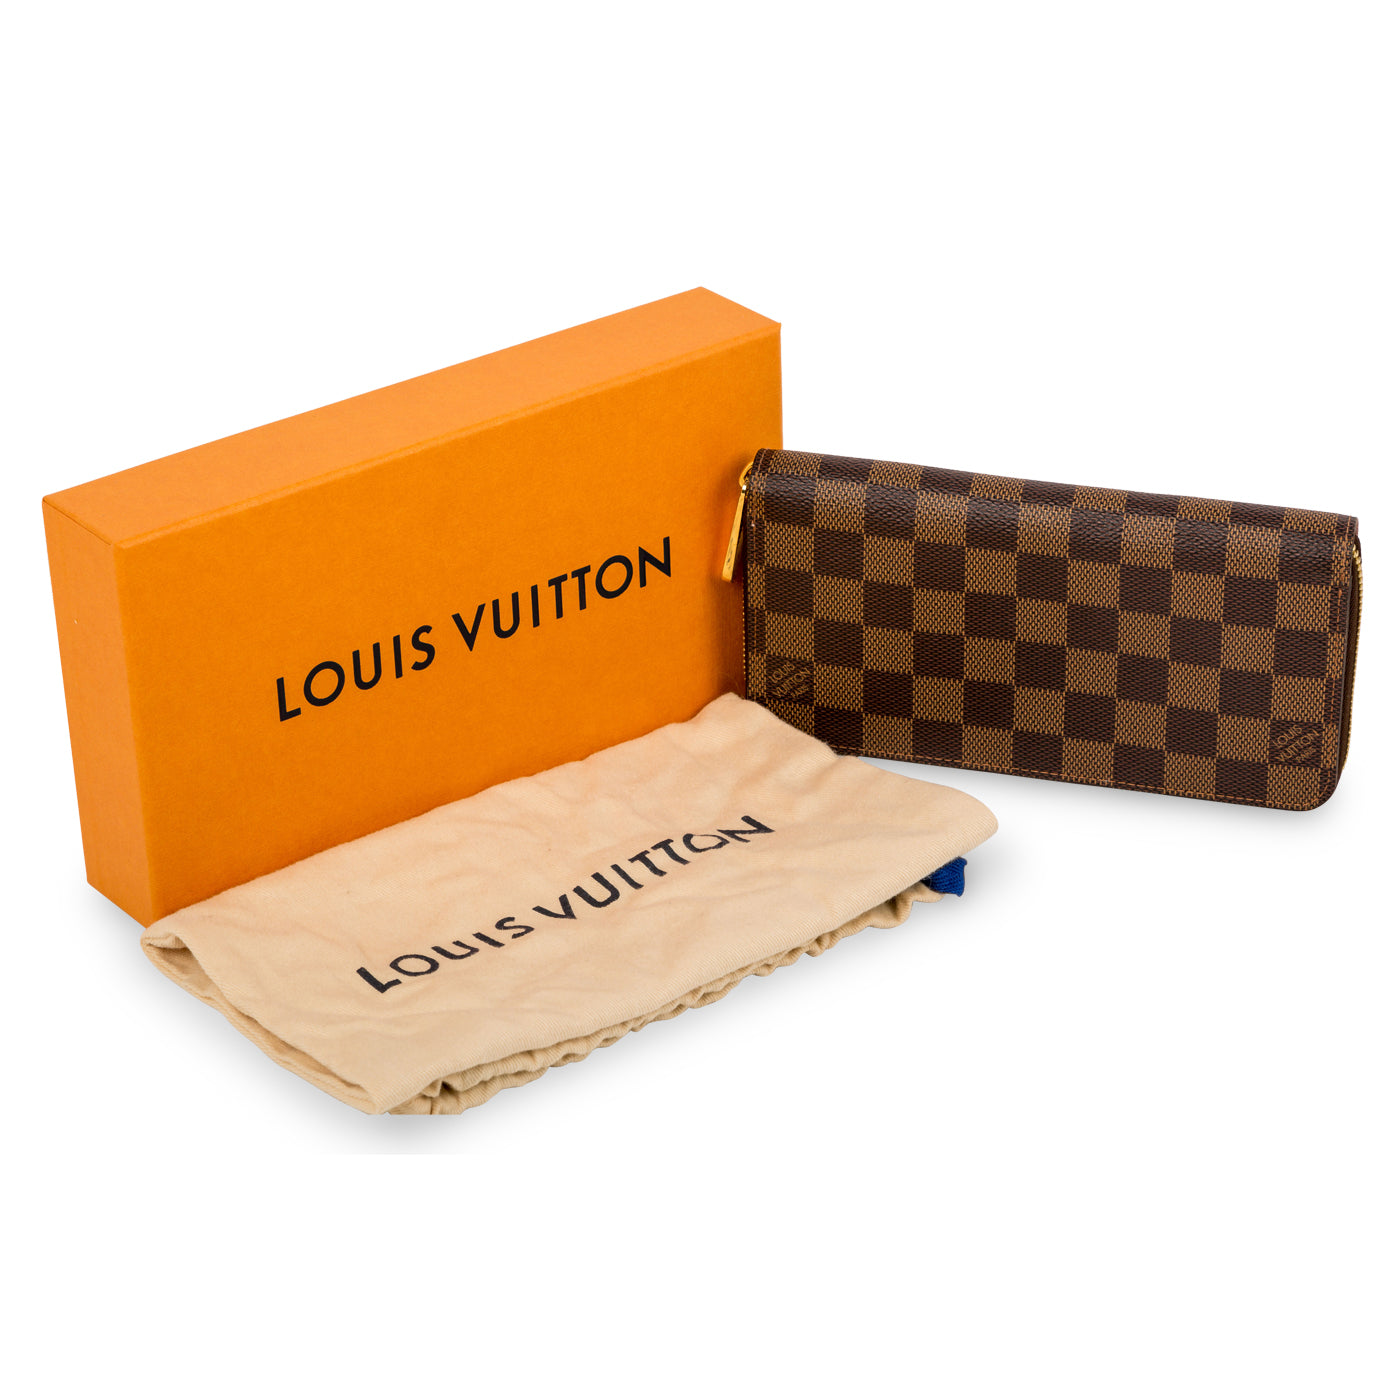 Louis Vuitton Damier Ebene Zippy Wallet - Meme's Treasures